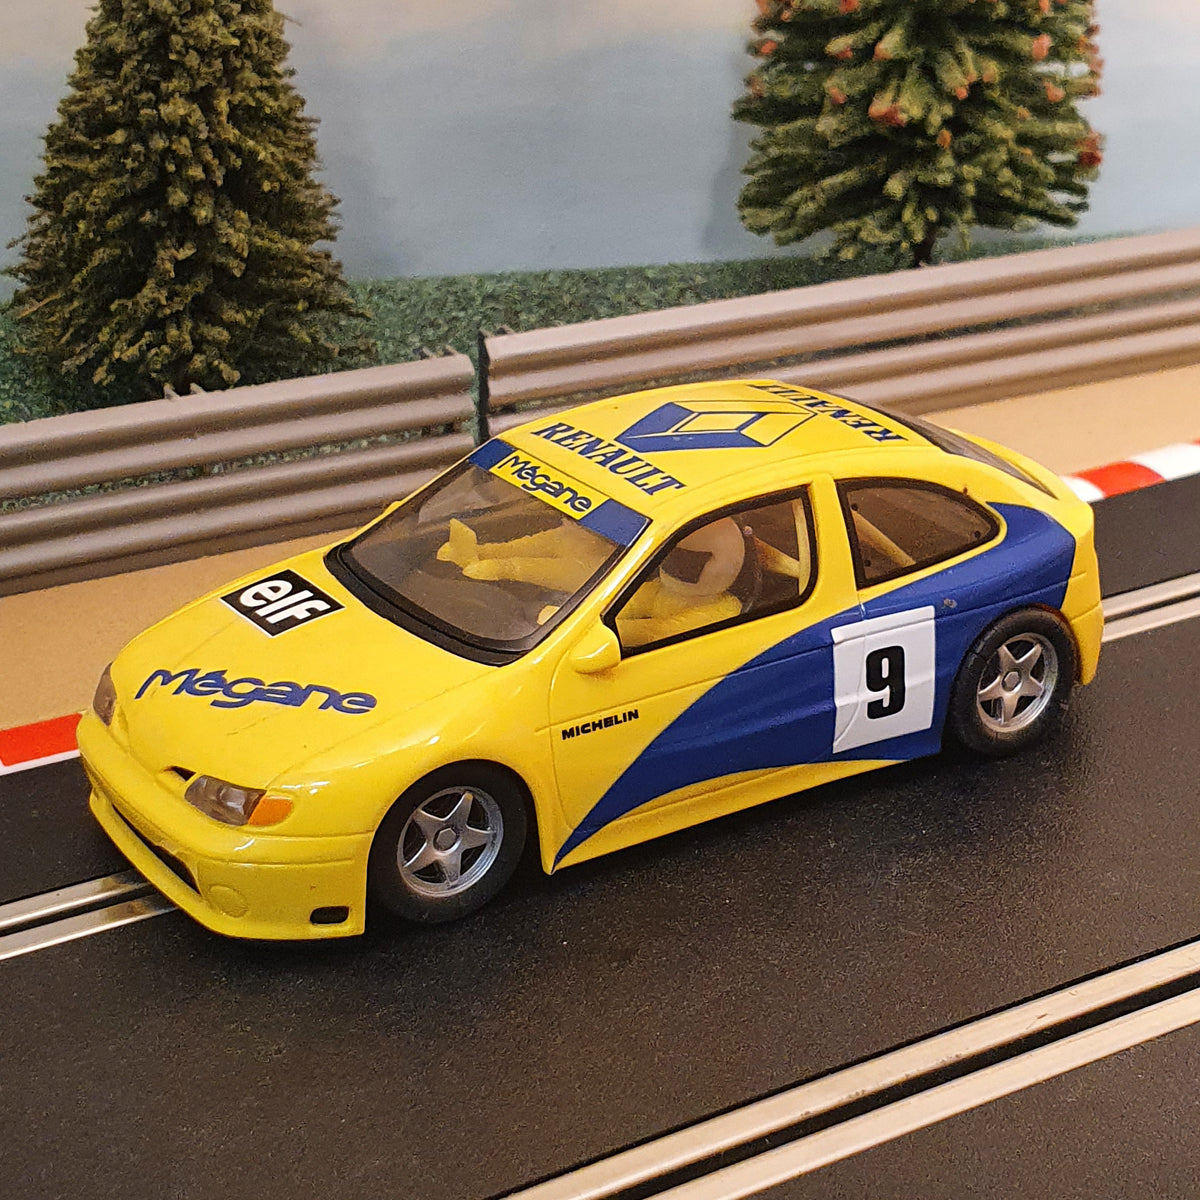 Scalextric 1:32 Car - Yellow Renault Megane #9 #S - Action Slot Racing